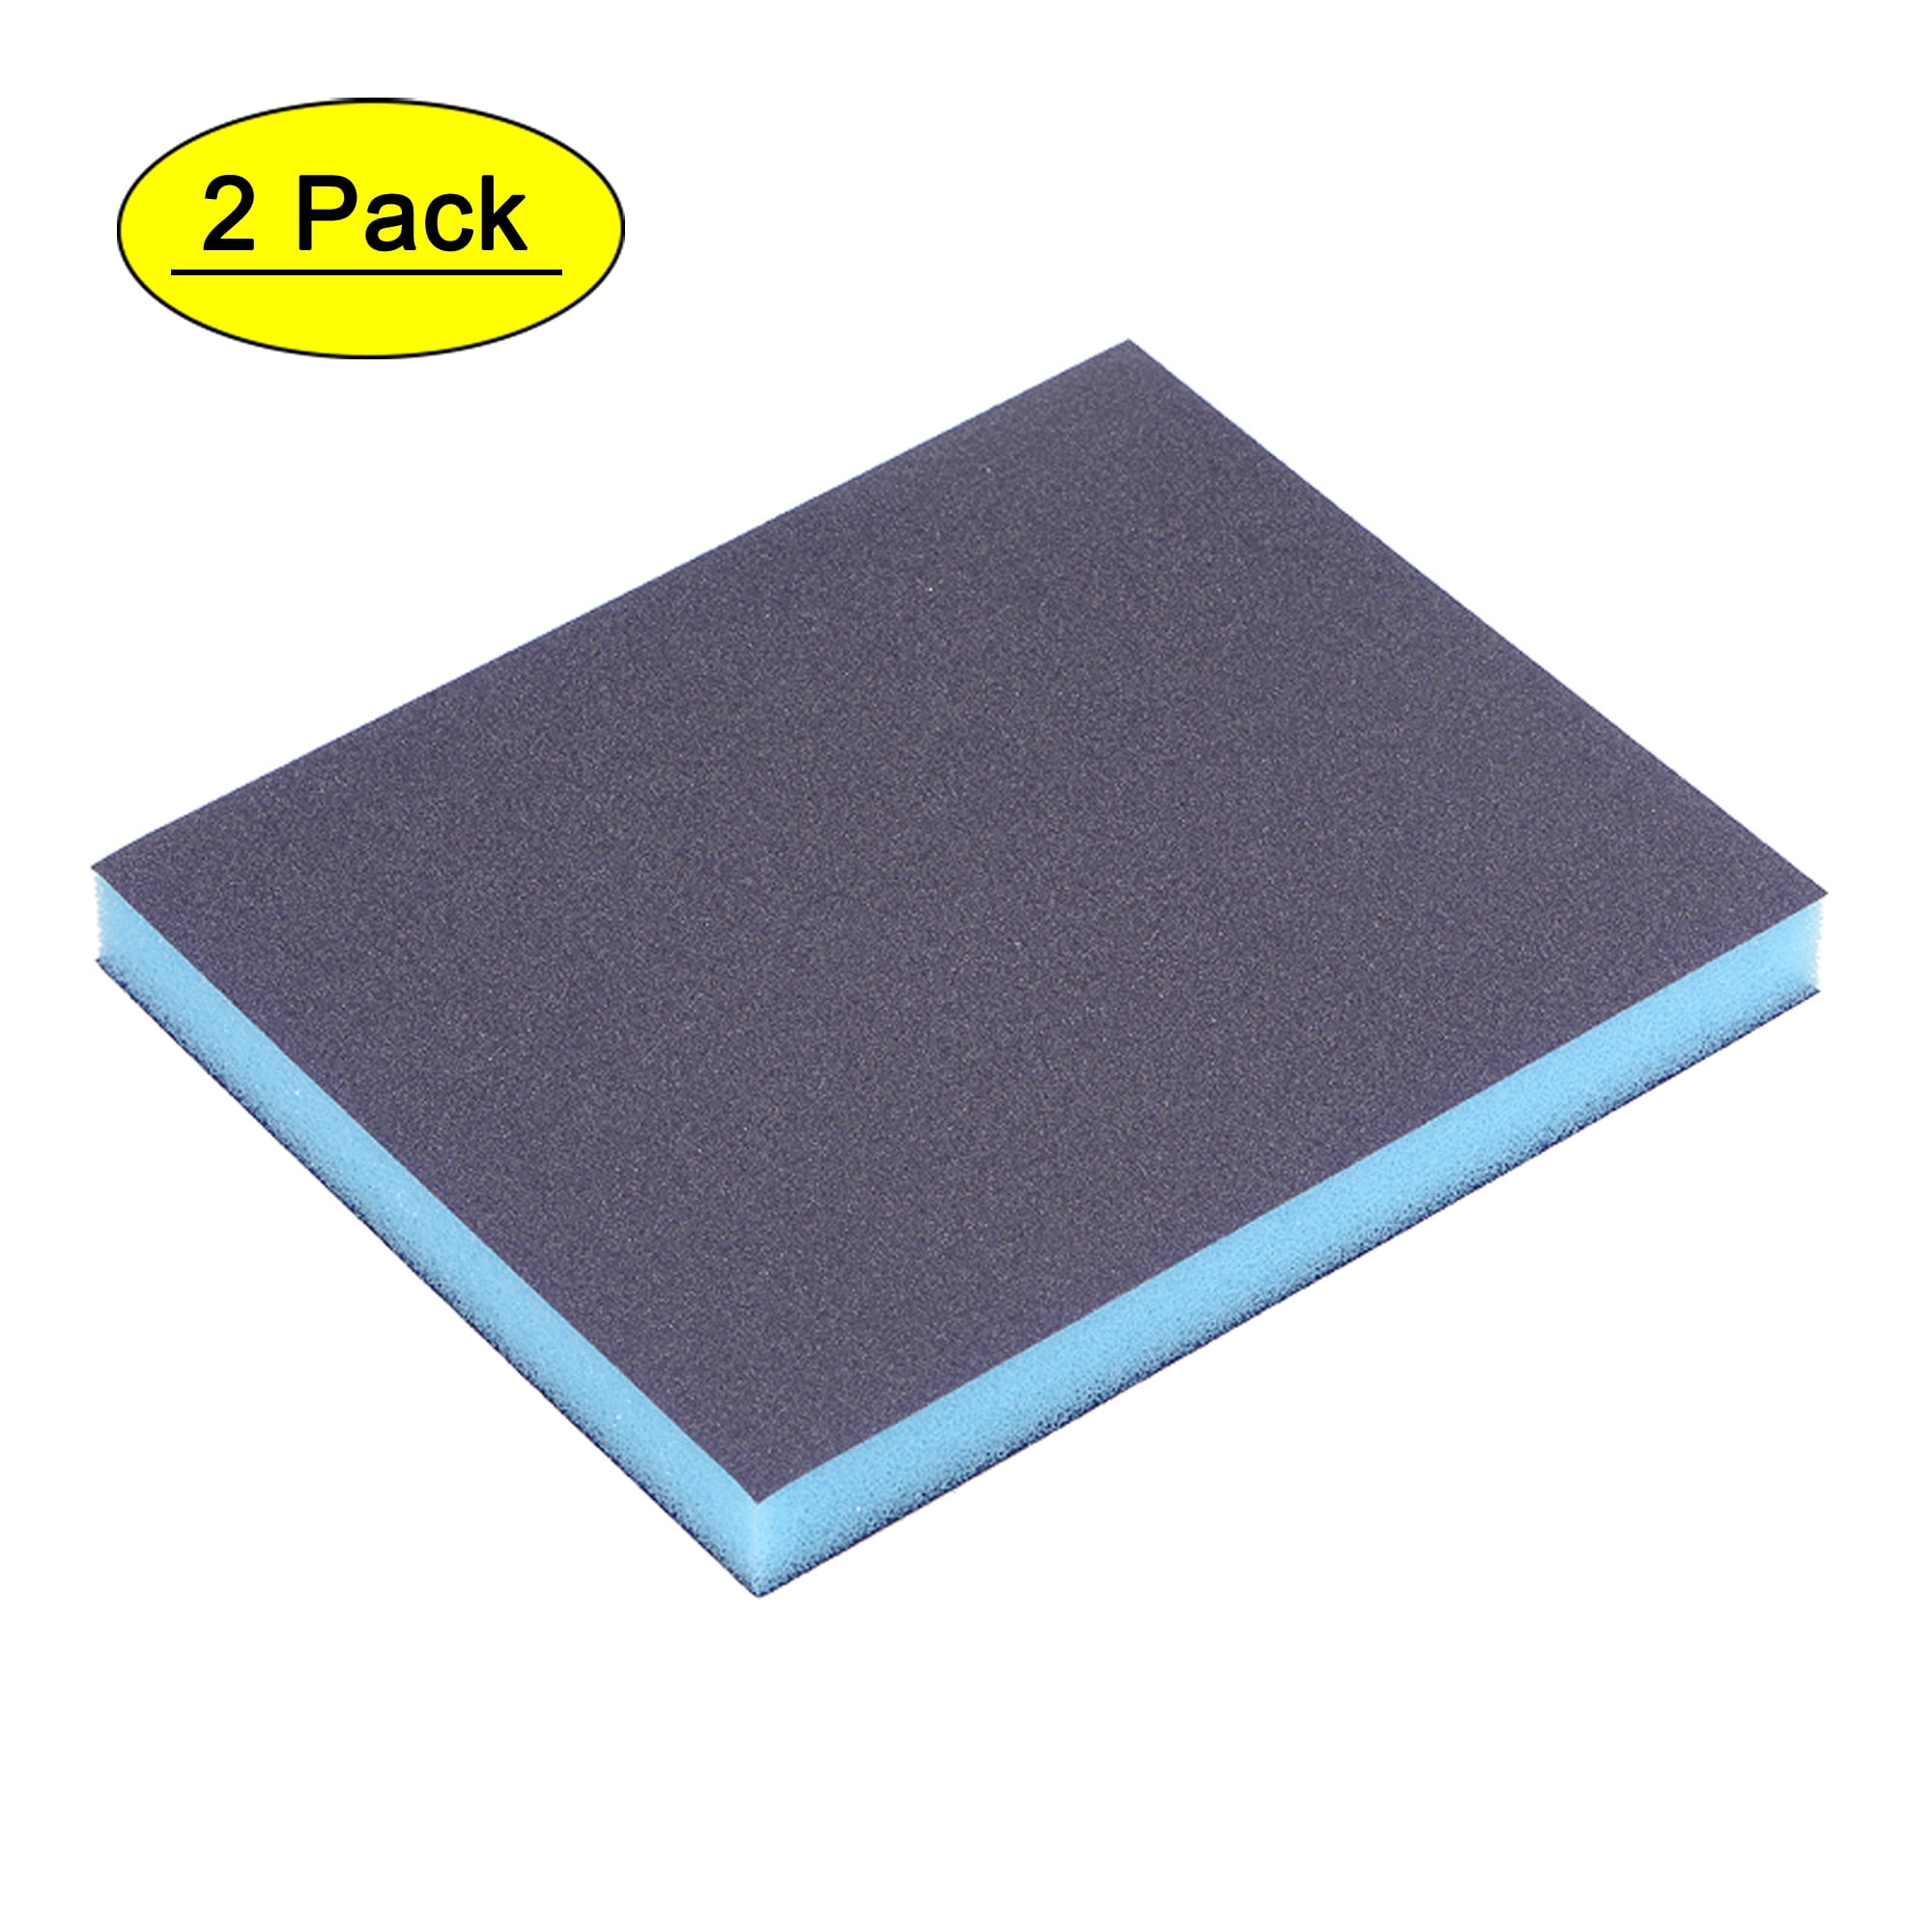 Sanding Sponge 220 Grit Sanding Block Pad Blue 2pcs 